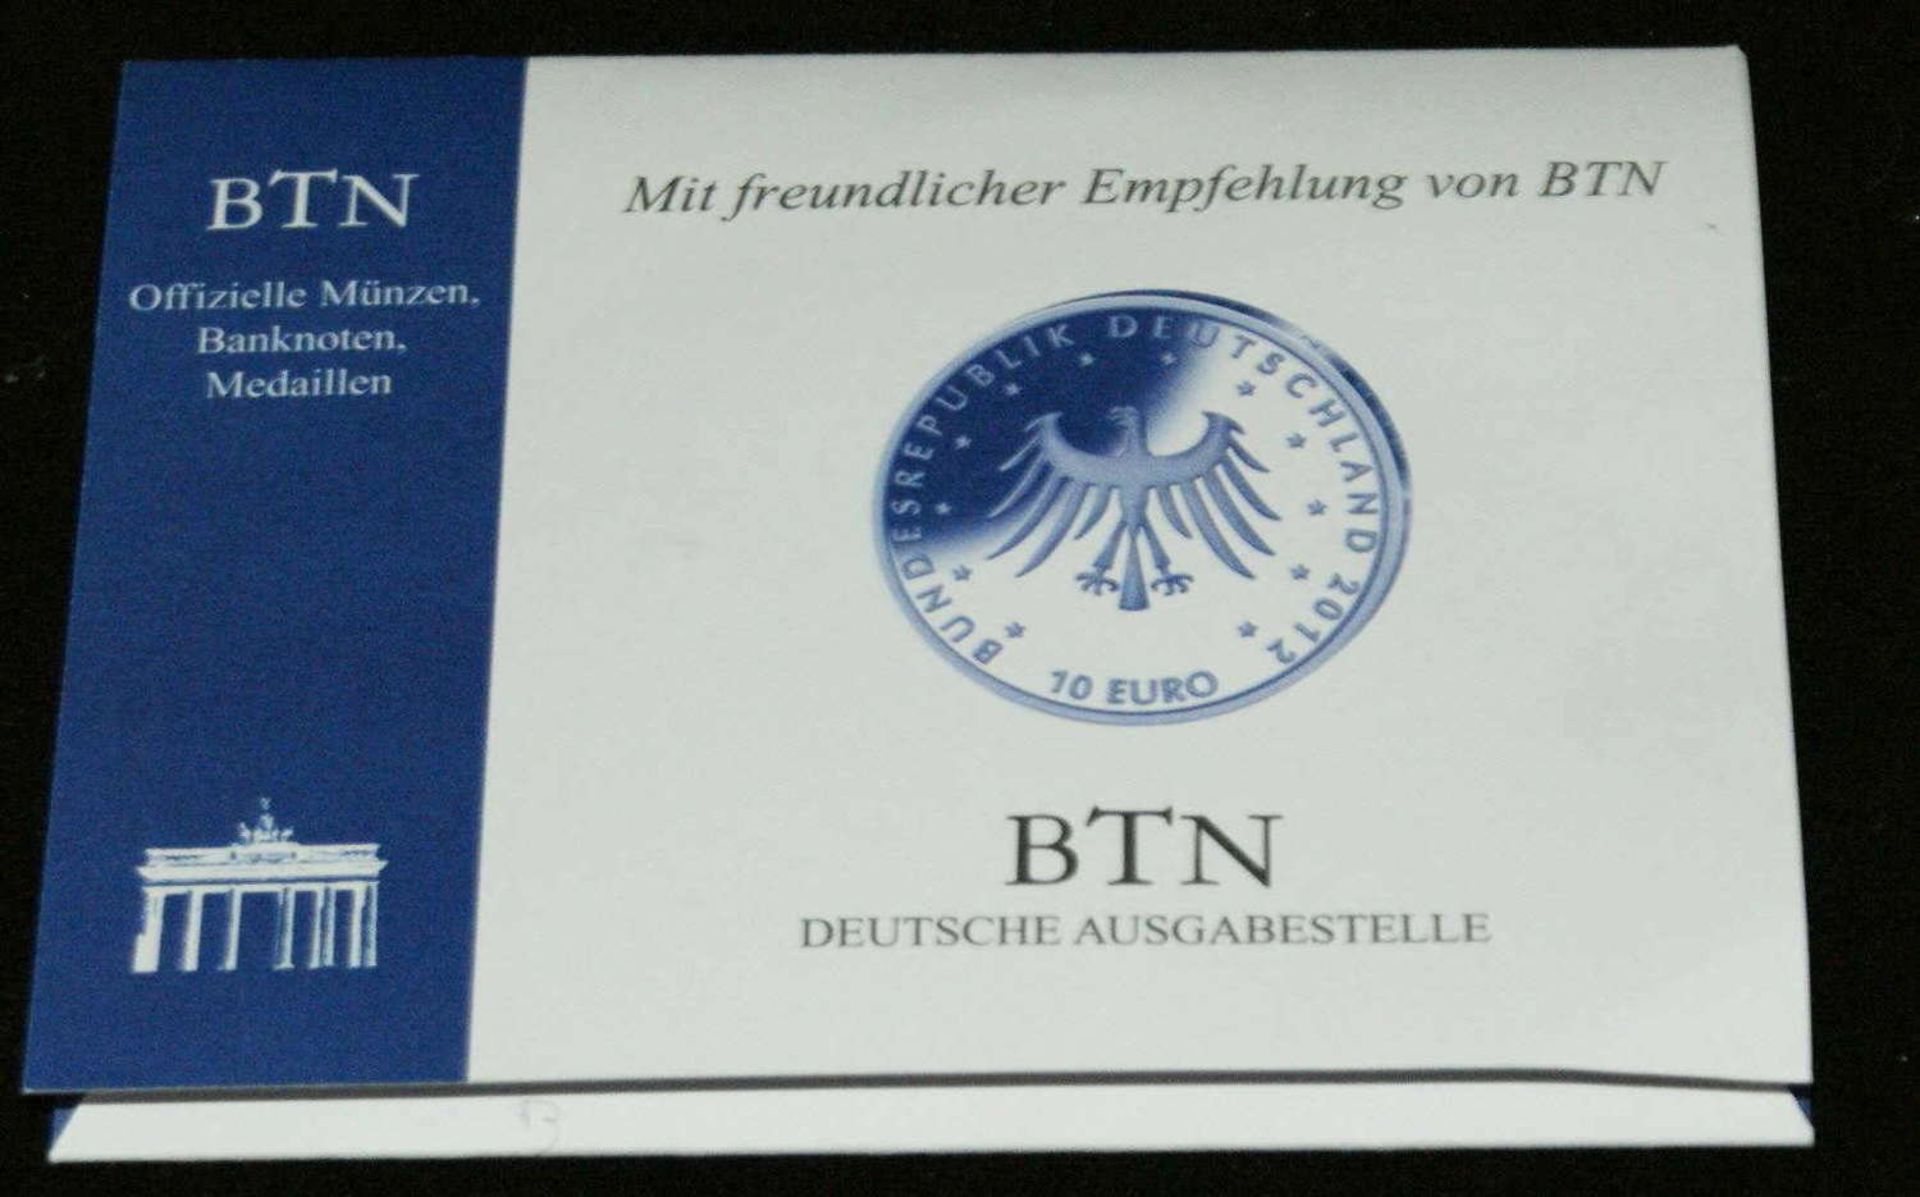 Sammlermünze "Bundespräsident Joachim Gauck" neusilber vergoldet, Spiegelglanz, unzirkuliert. - Bild 3 aus 3